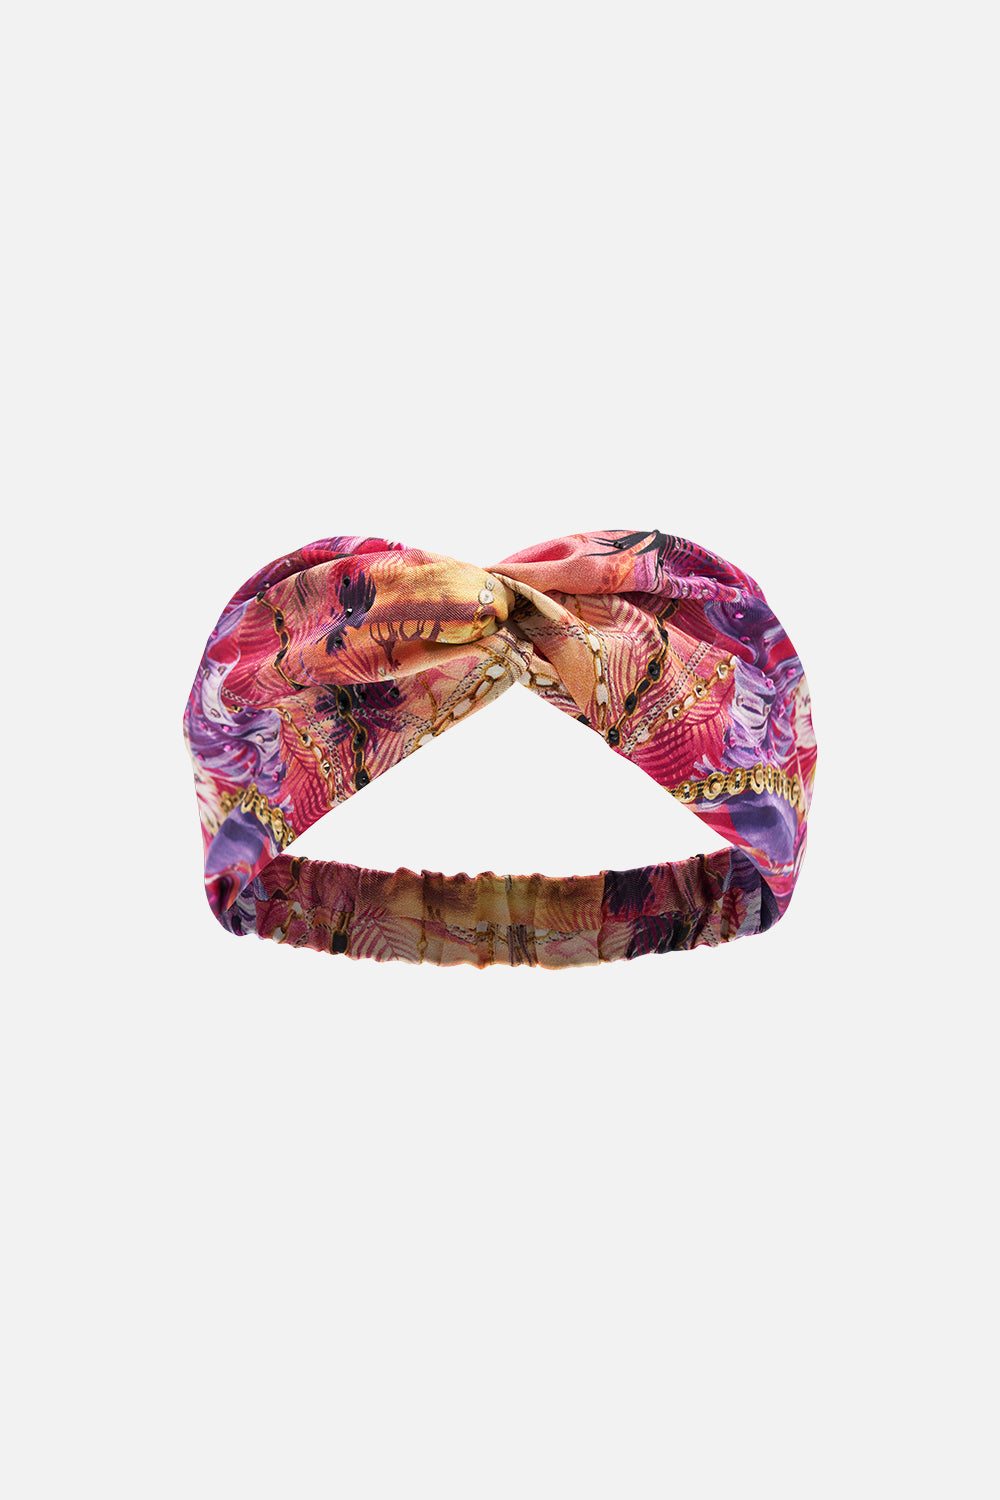 Product view of CAMILLA silk woven twist headband in Wild Loving print